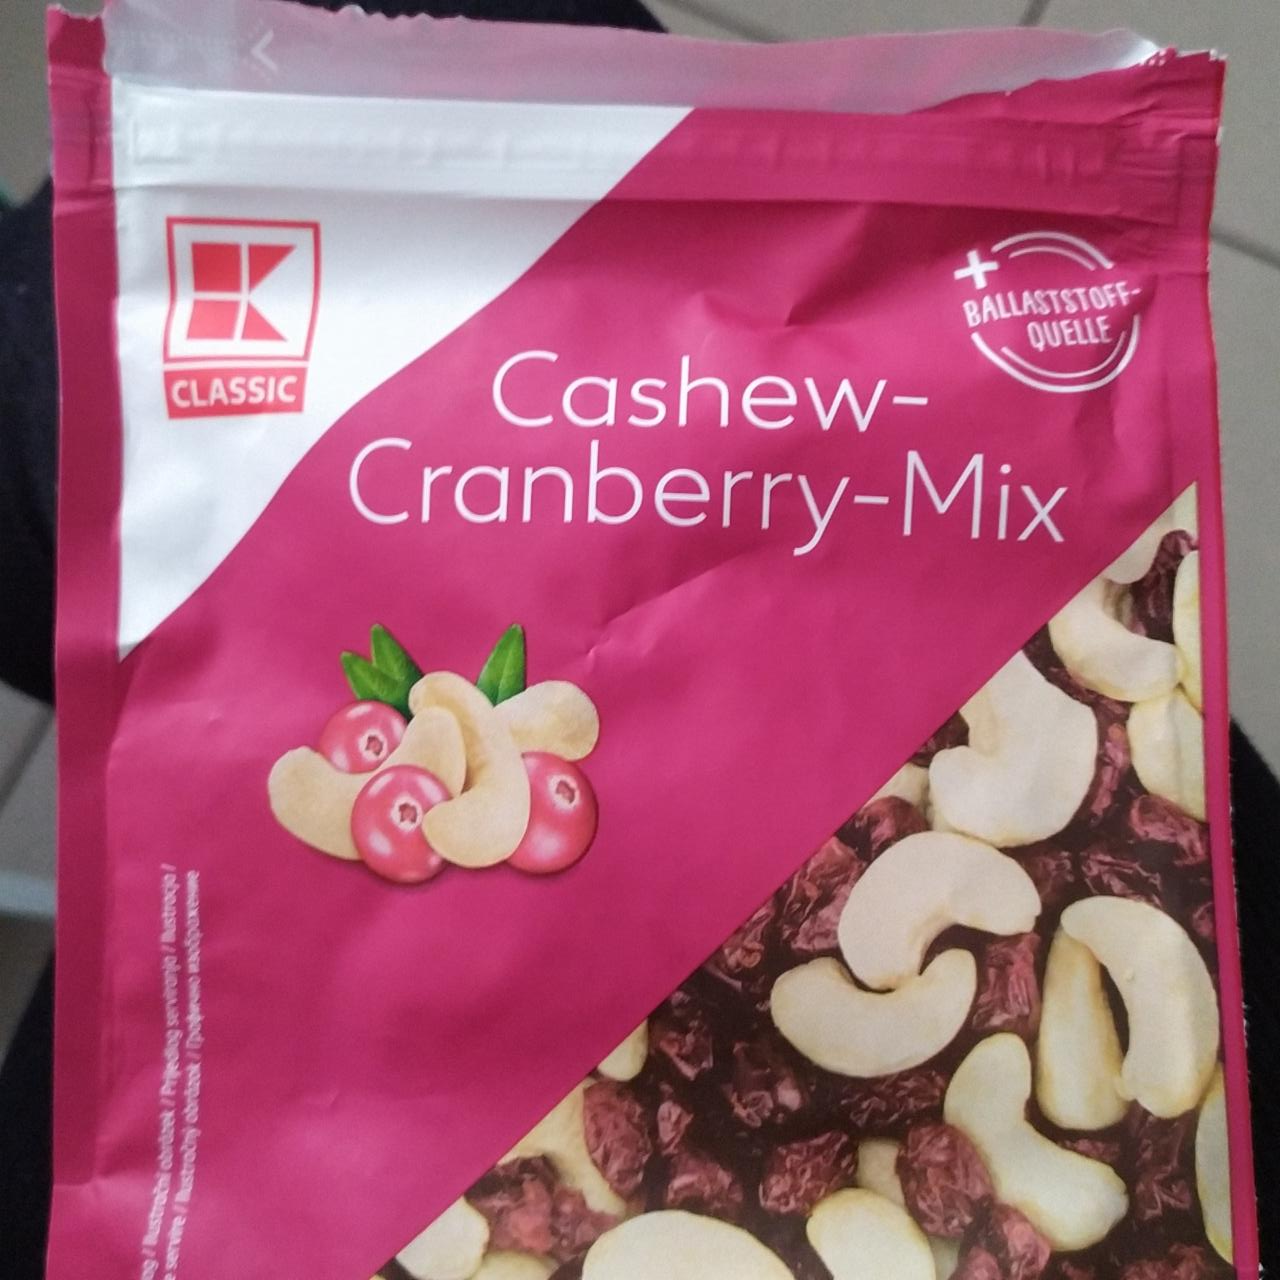 Fotografie - Cashew-Cranberry-Mix K-Classic